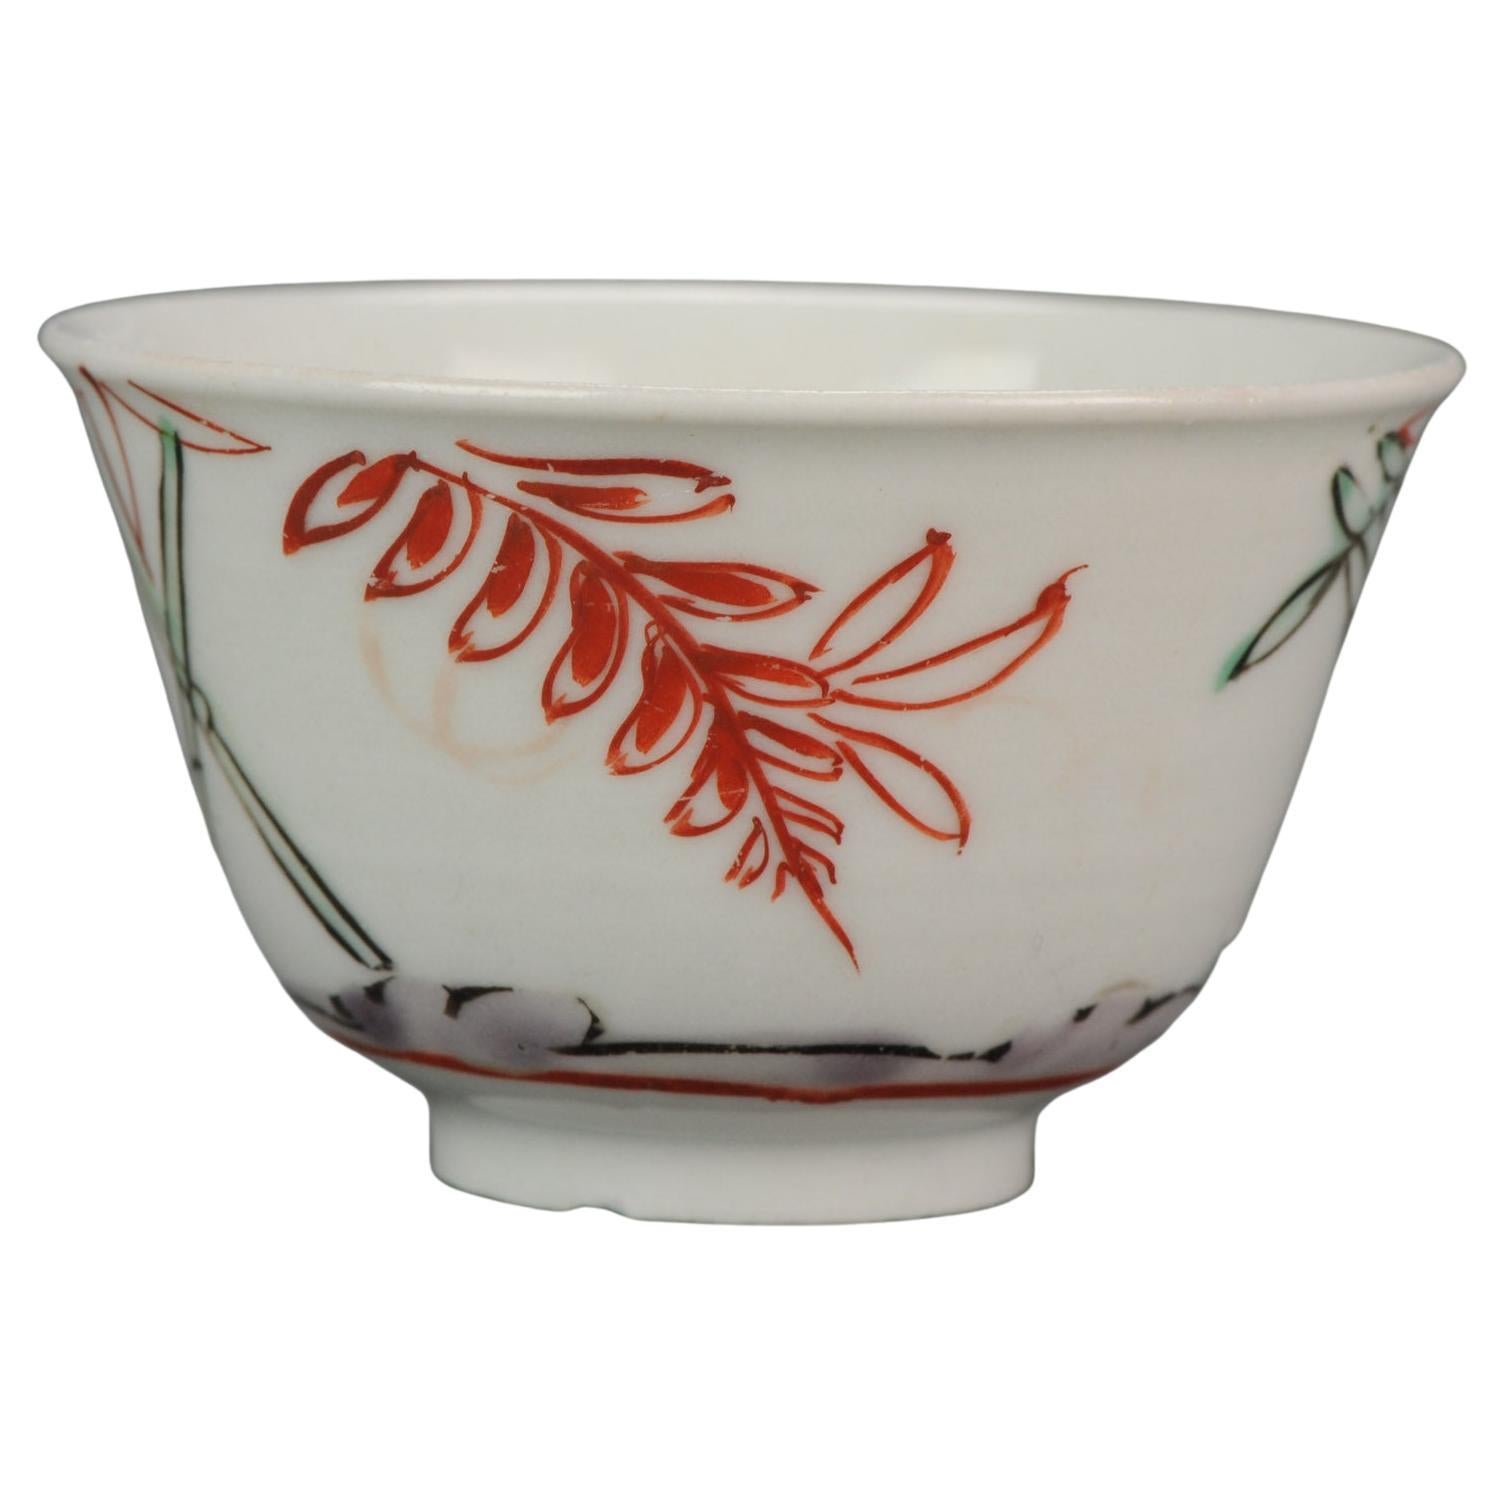 Antique Japanese Porcelain Tea Bowls Arita, 18th Century